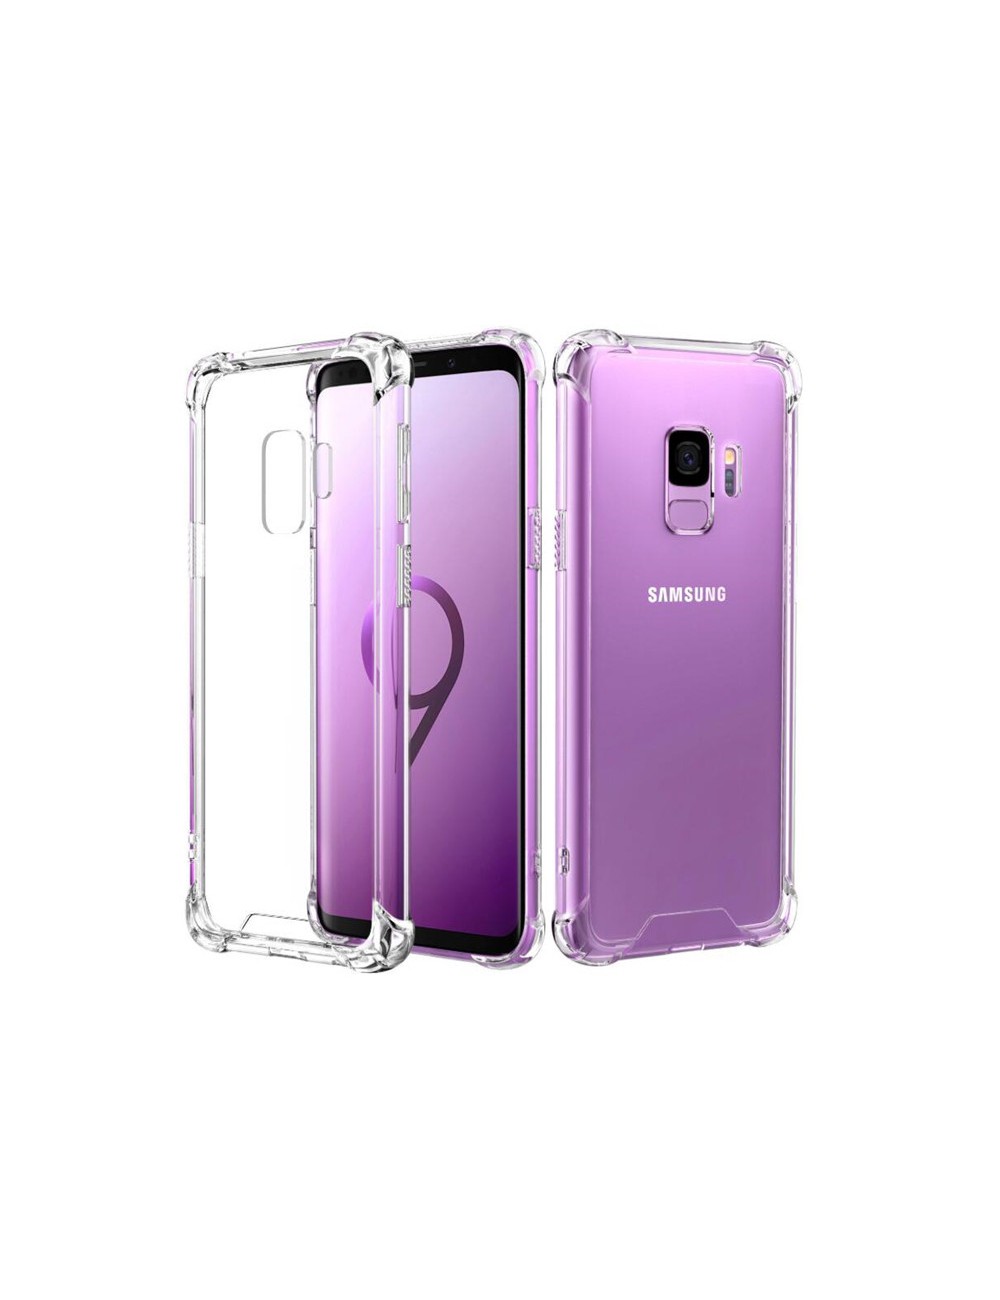 manager Stof Ontoegankelijk Samsung Galaxy S9 anti shock transparent TPU hoesje